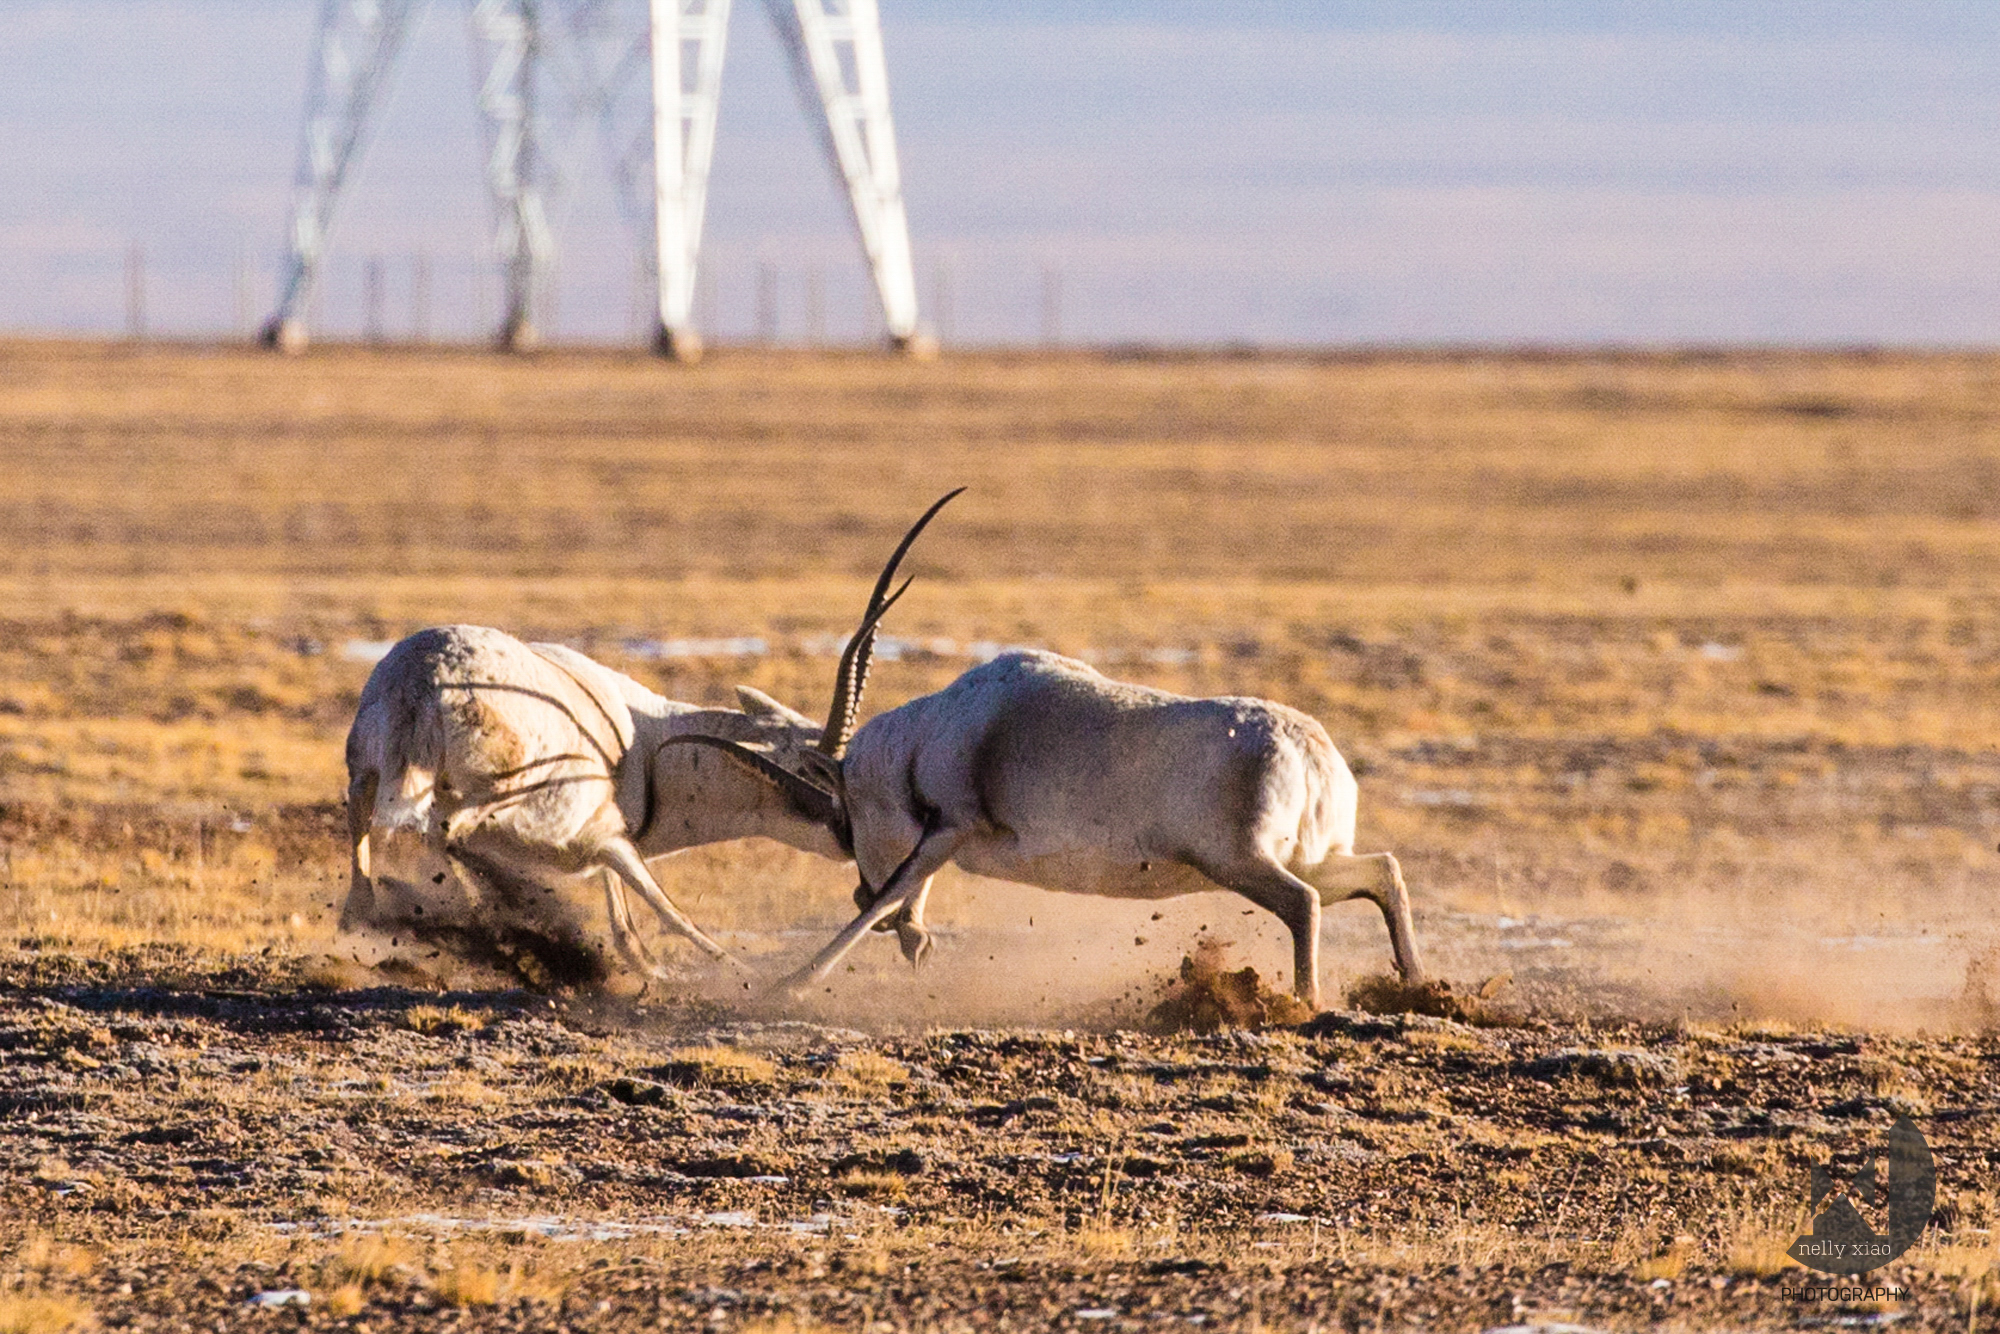   Male Tibetan antelope crushing his opponent in a mating battle   Kekexili Wildlife Conservation, December 2015 - Mating season 